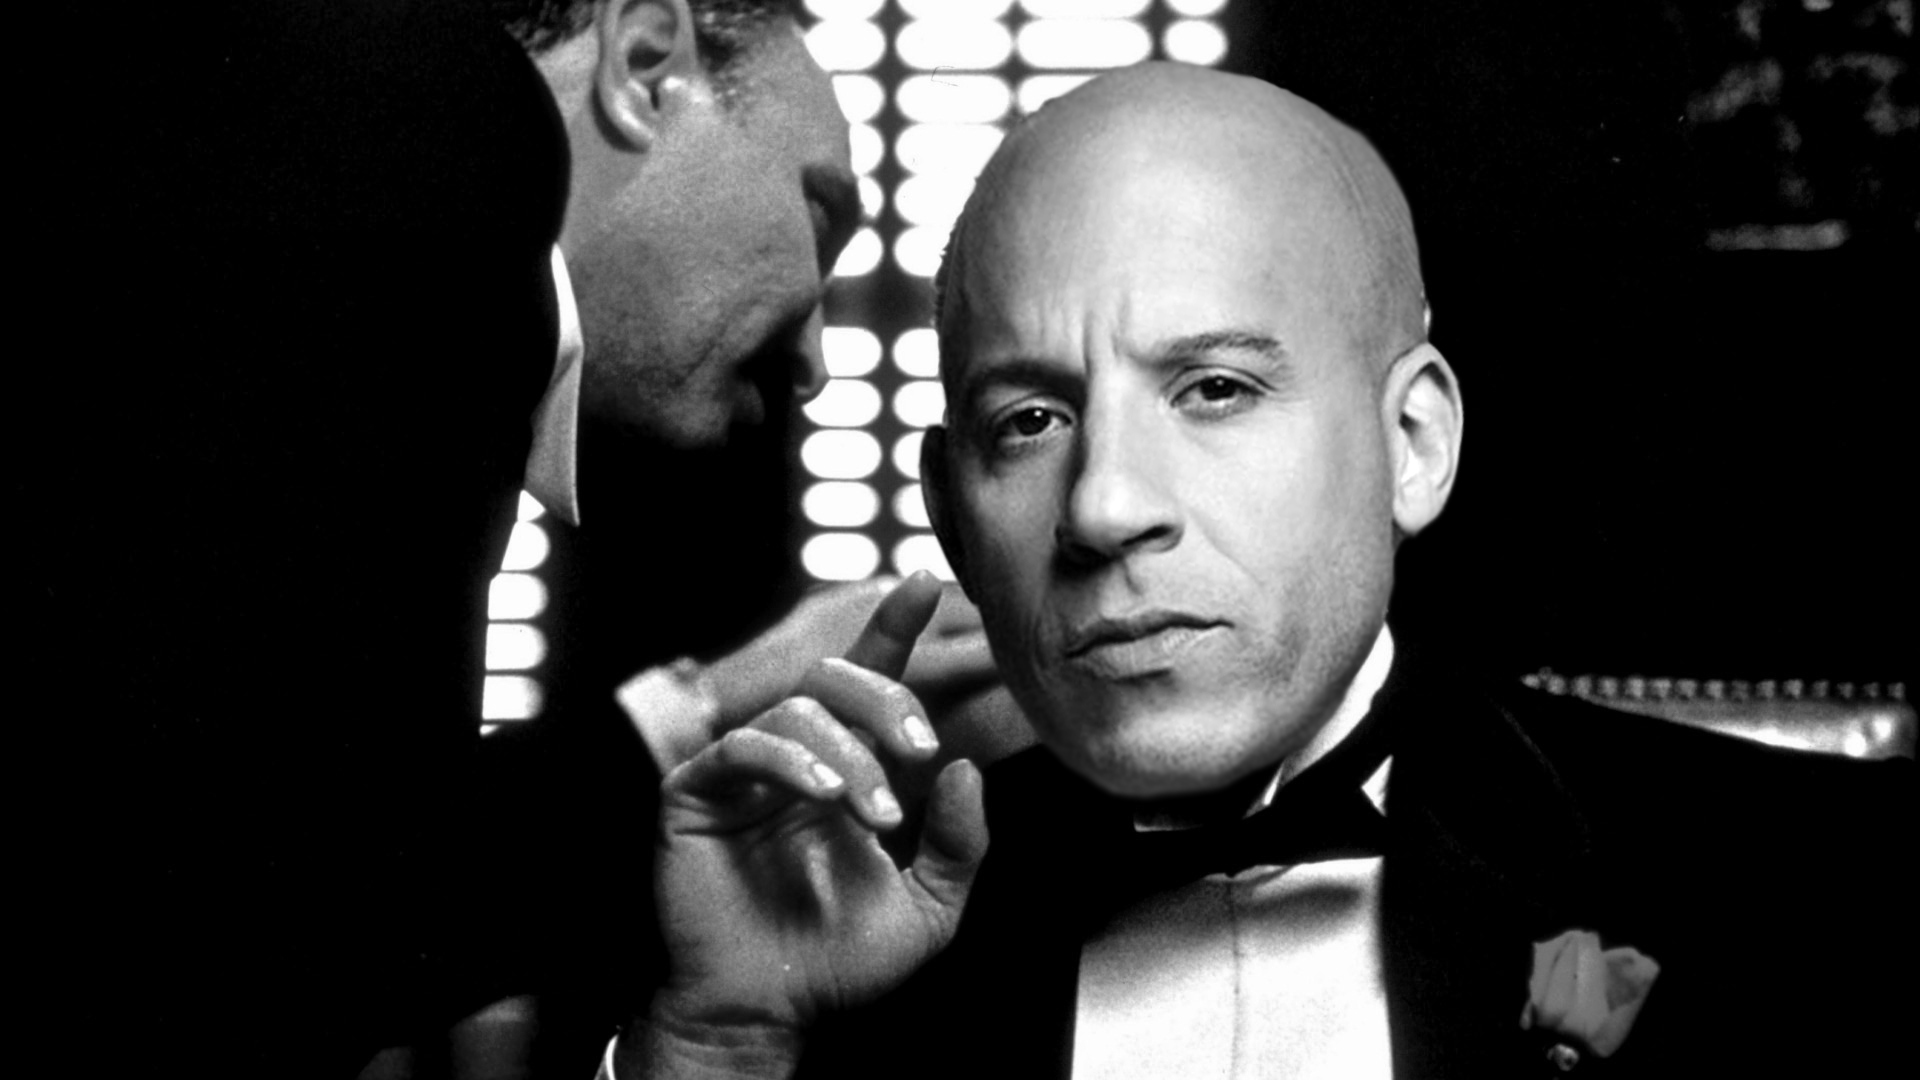 Vin Diesel as the Godfather Media by Austin Stephens